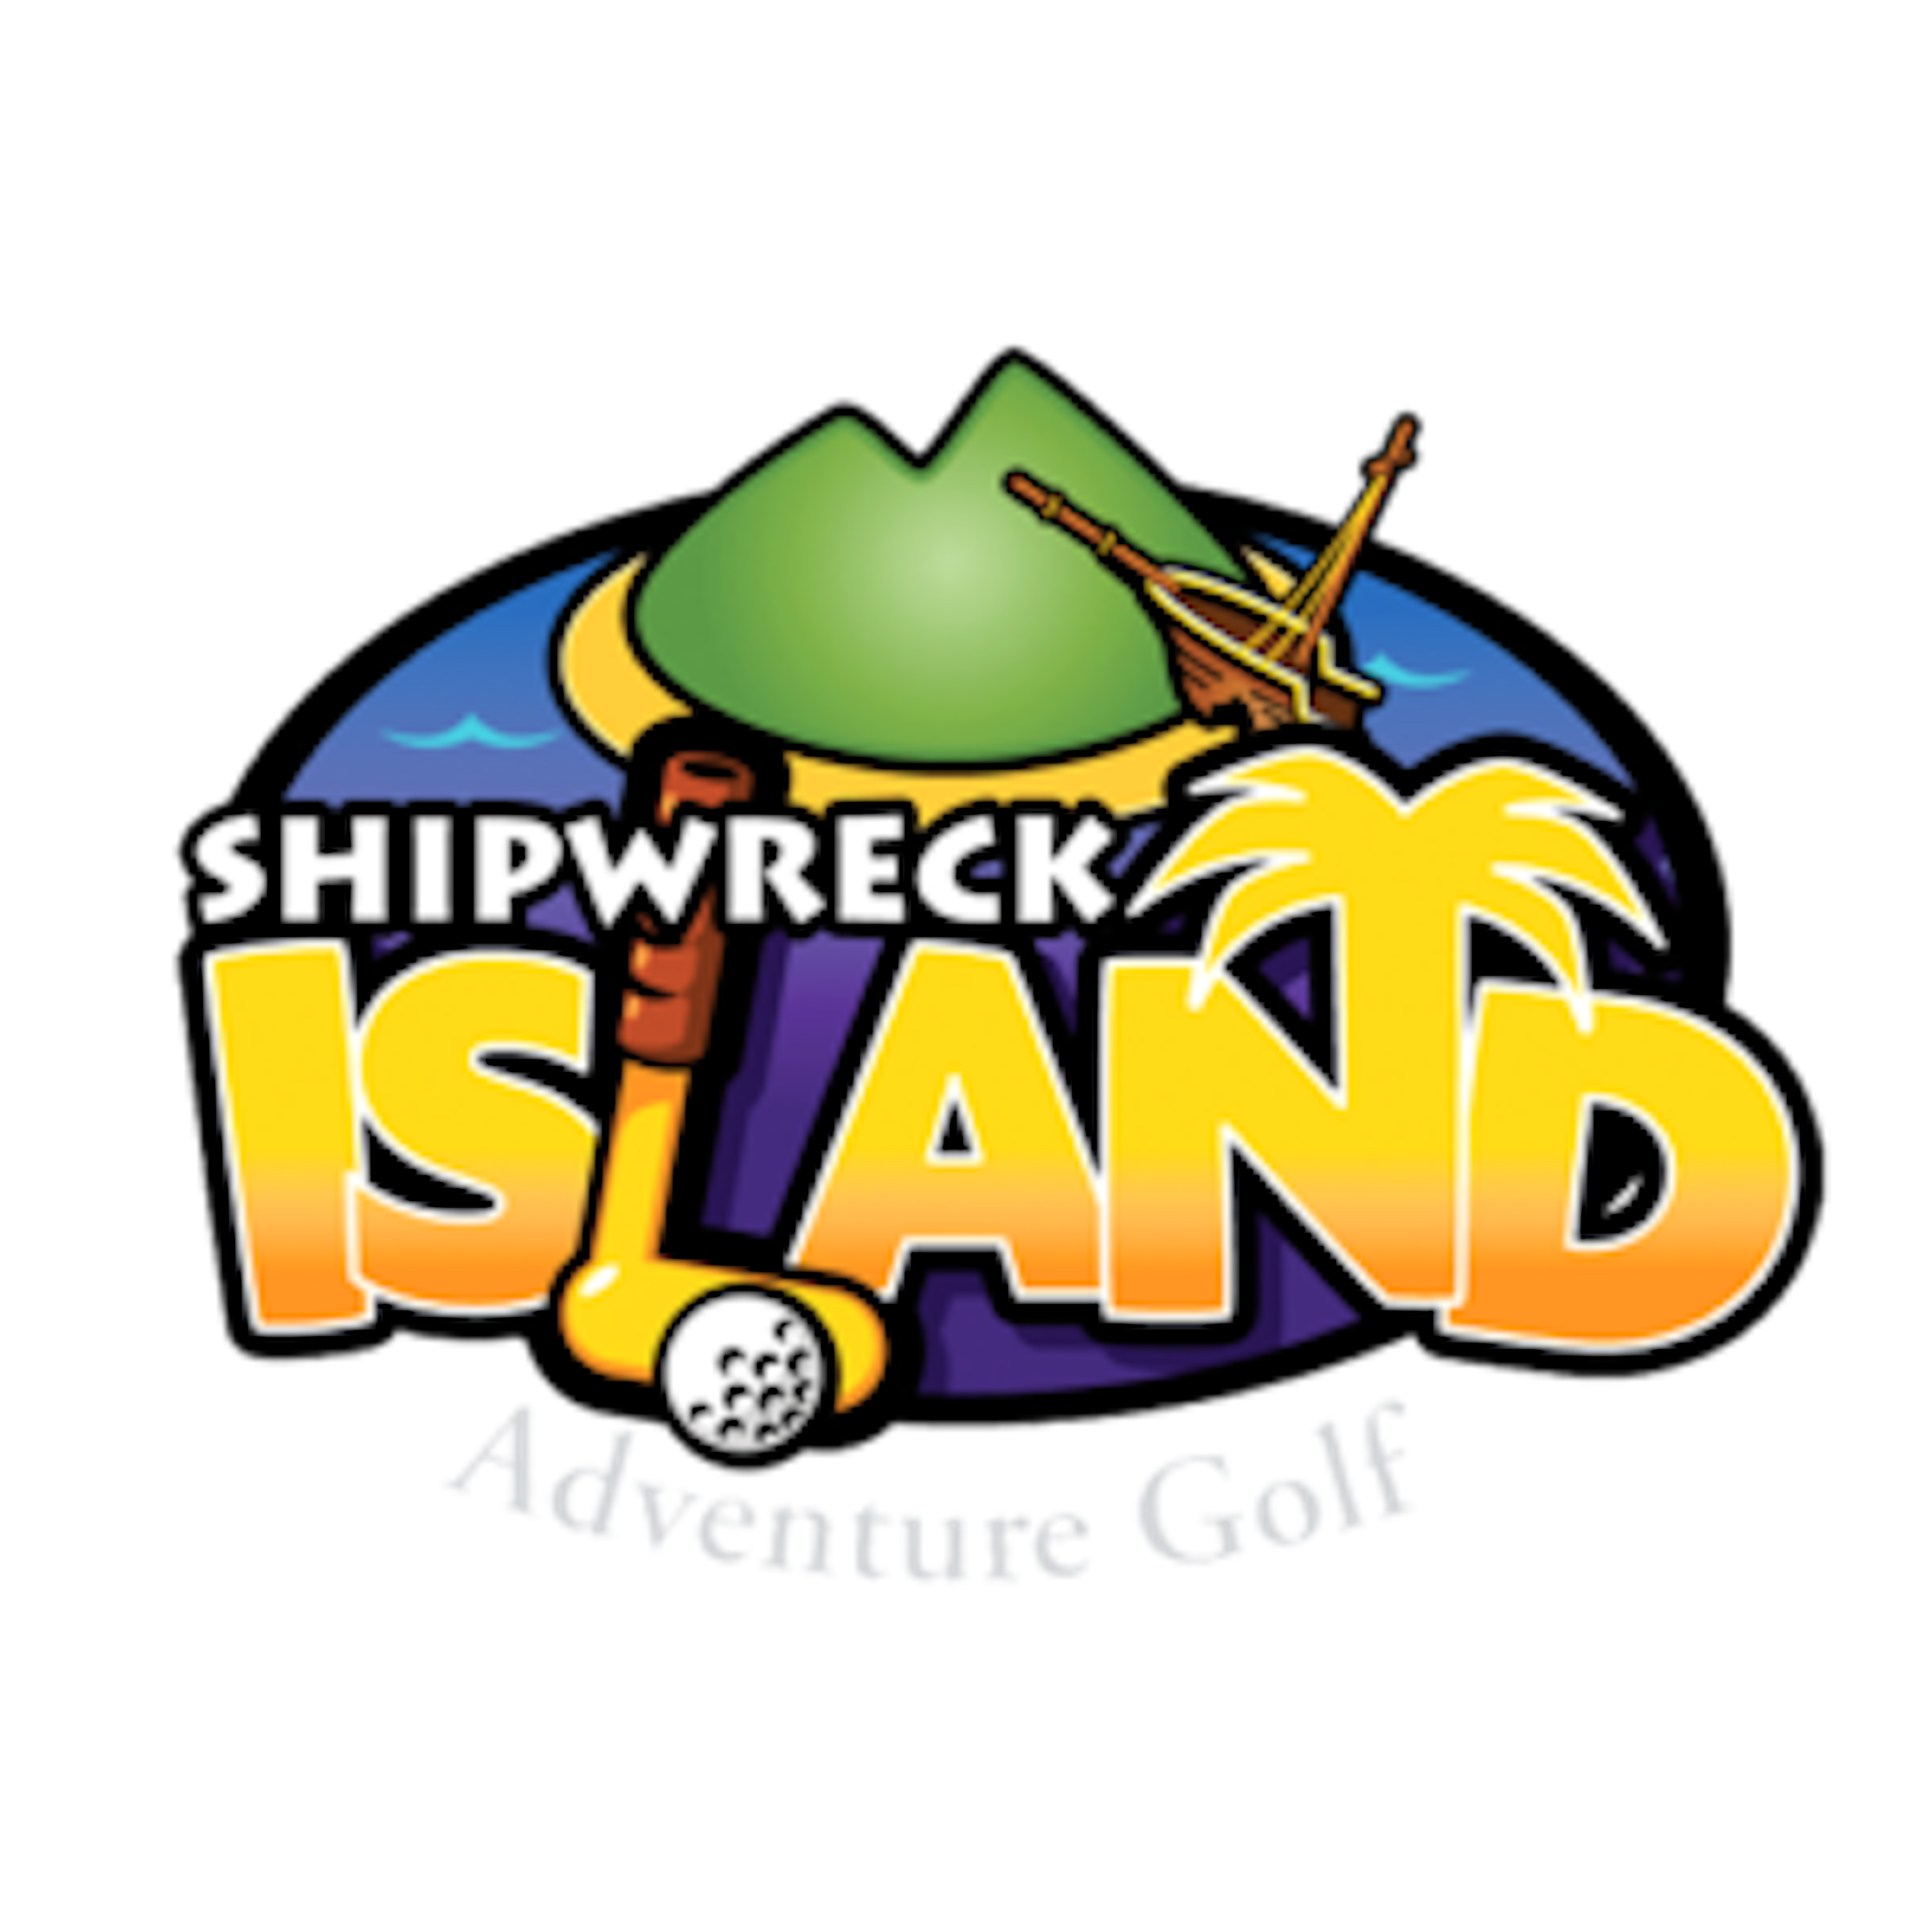 Shipwreck Island Adventure Golf